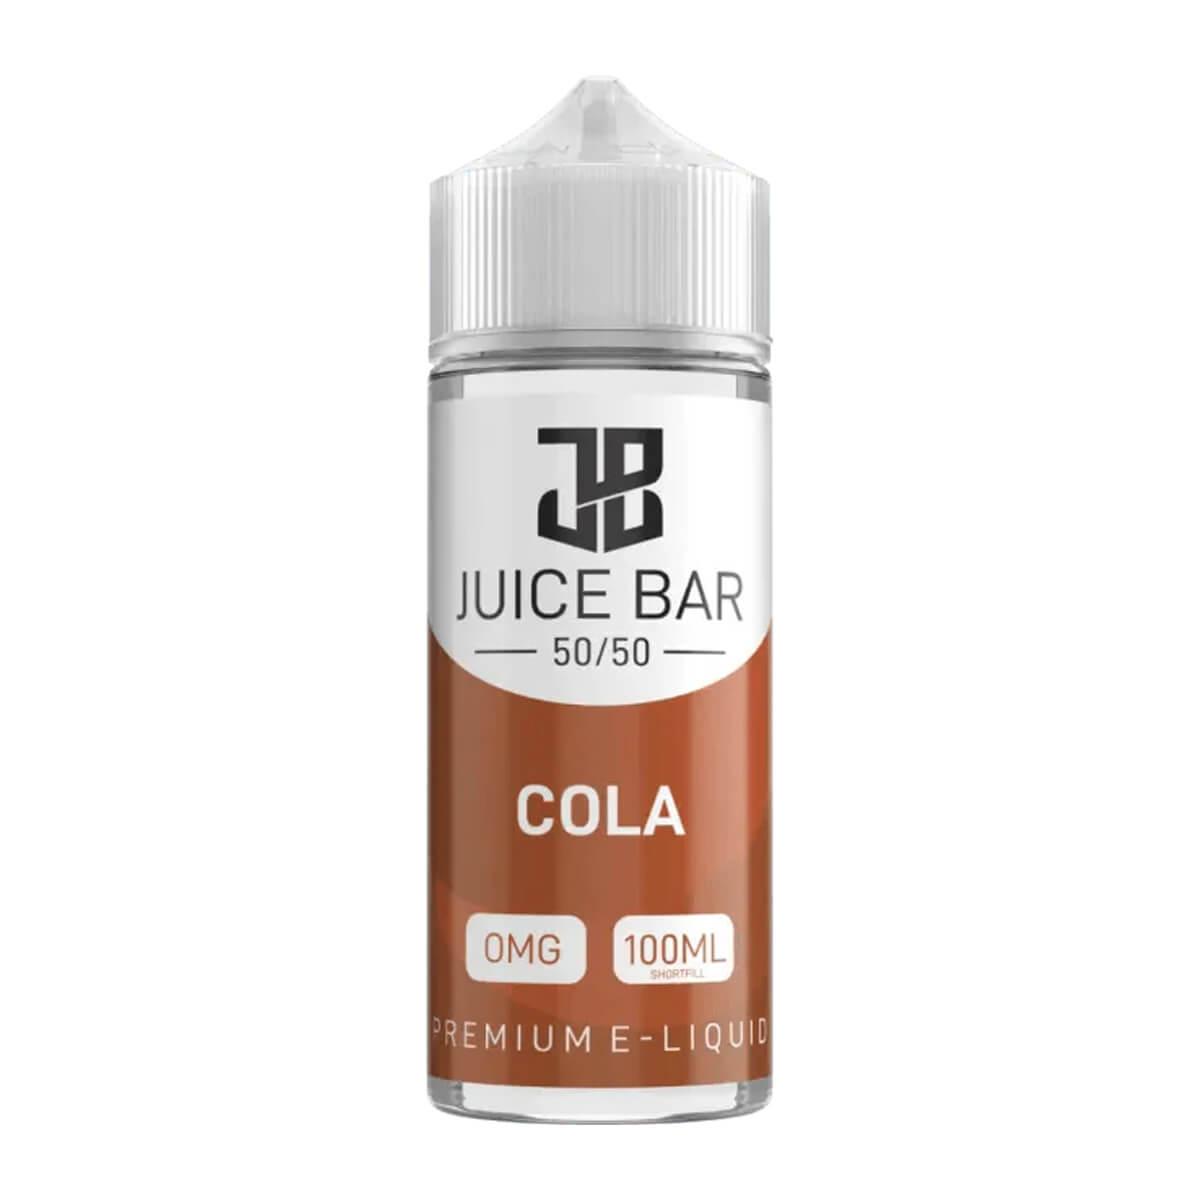 Cola 100ml Shortfill E-Liquid by Juice Bar